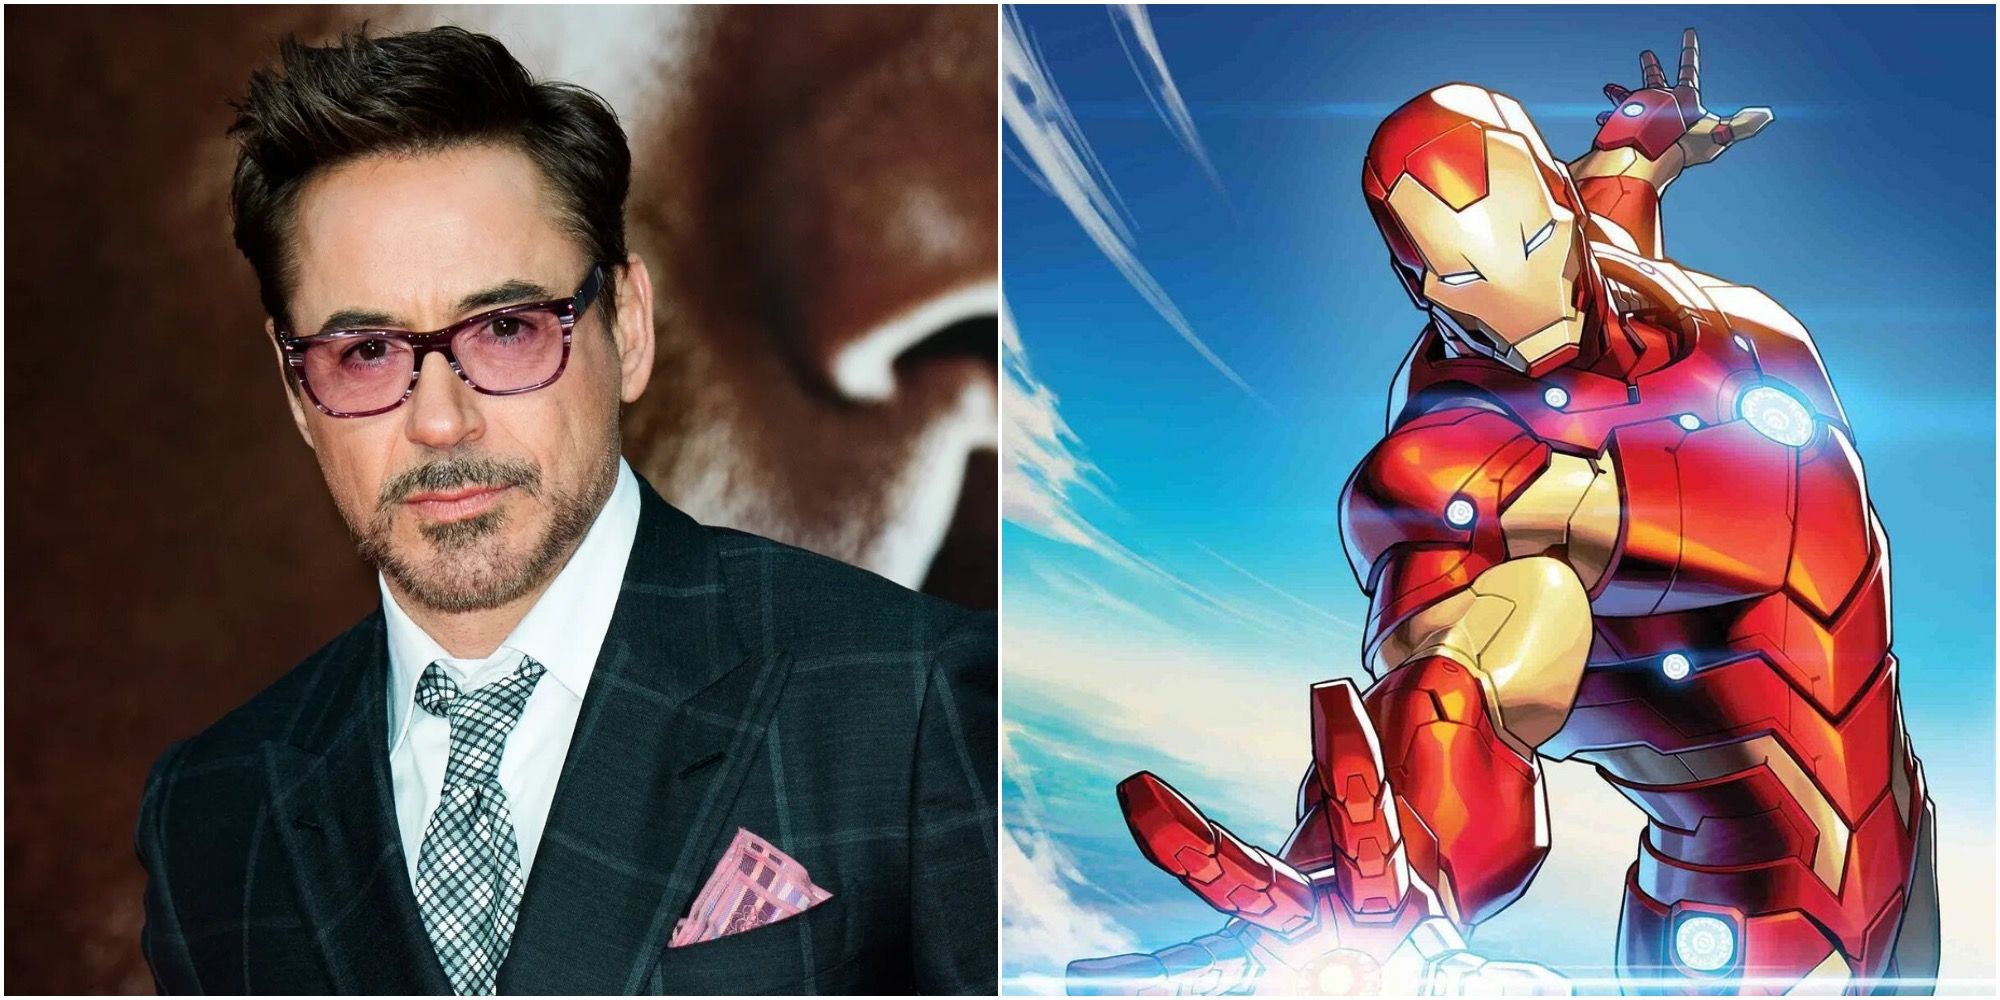 Robert Downey Jr. and Iron Man in the comics